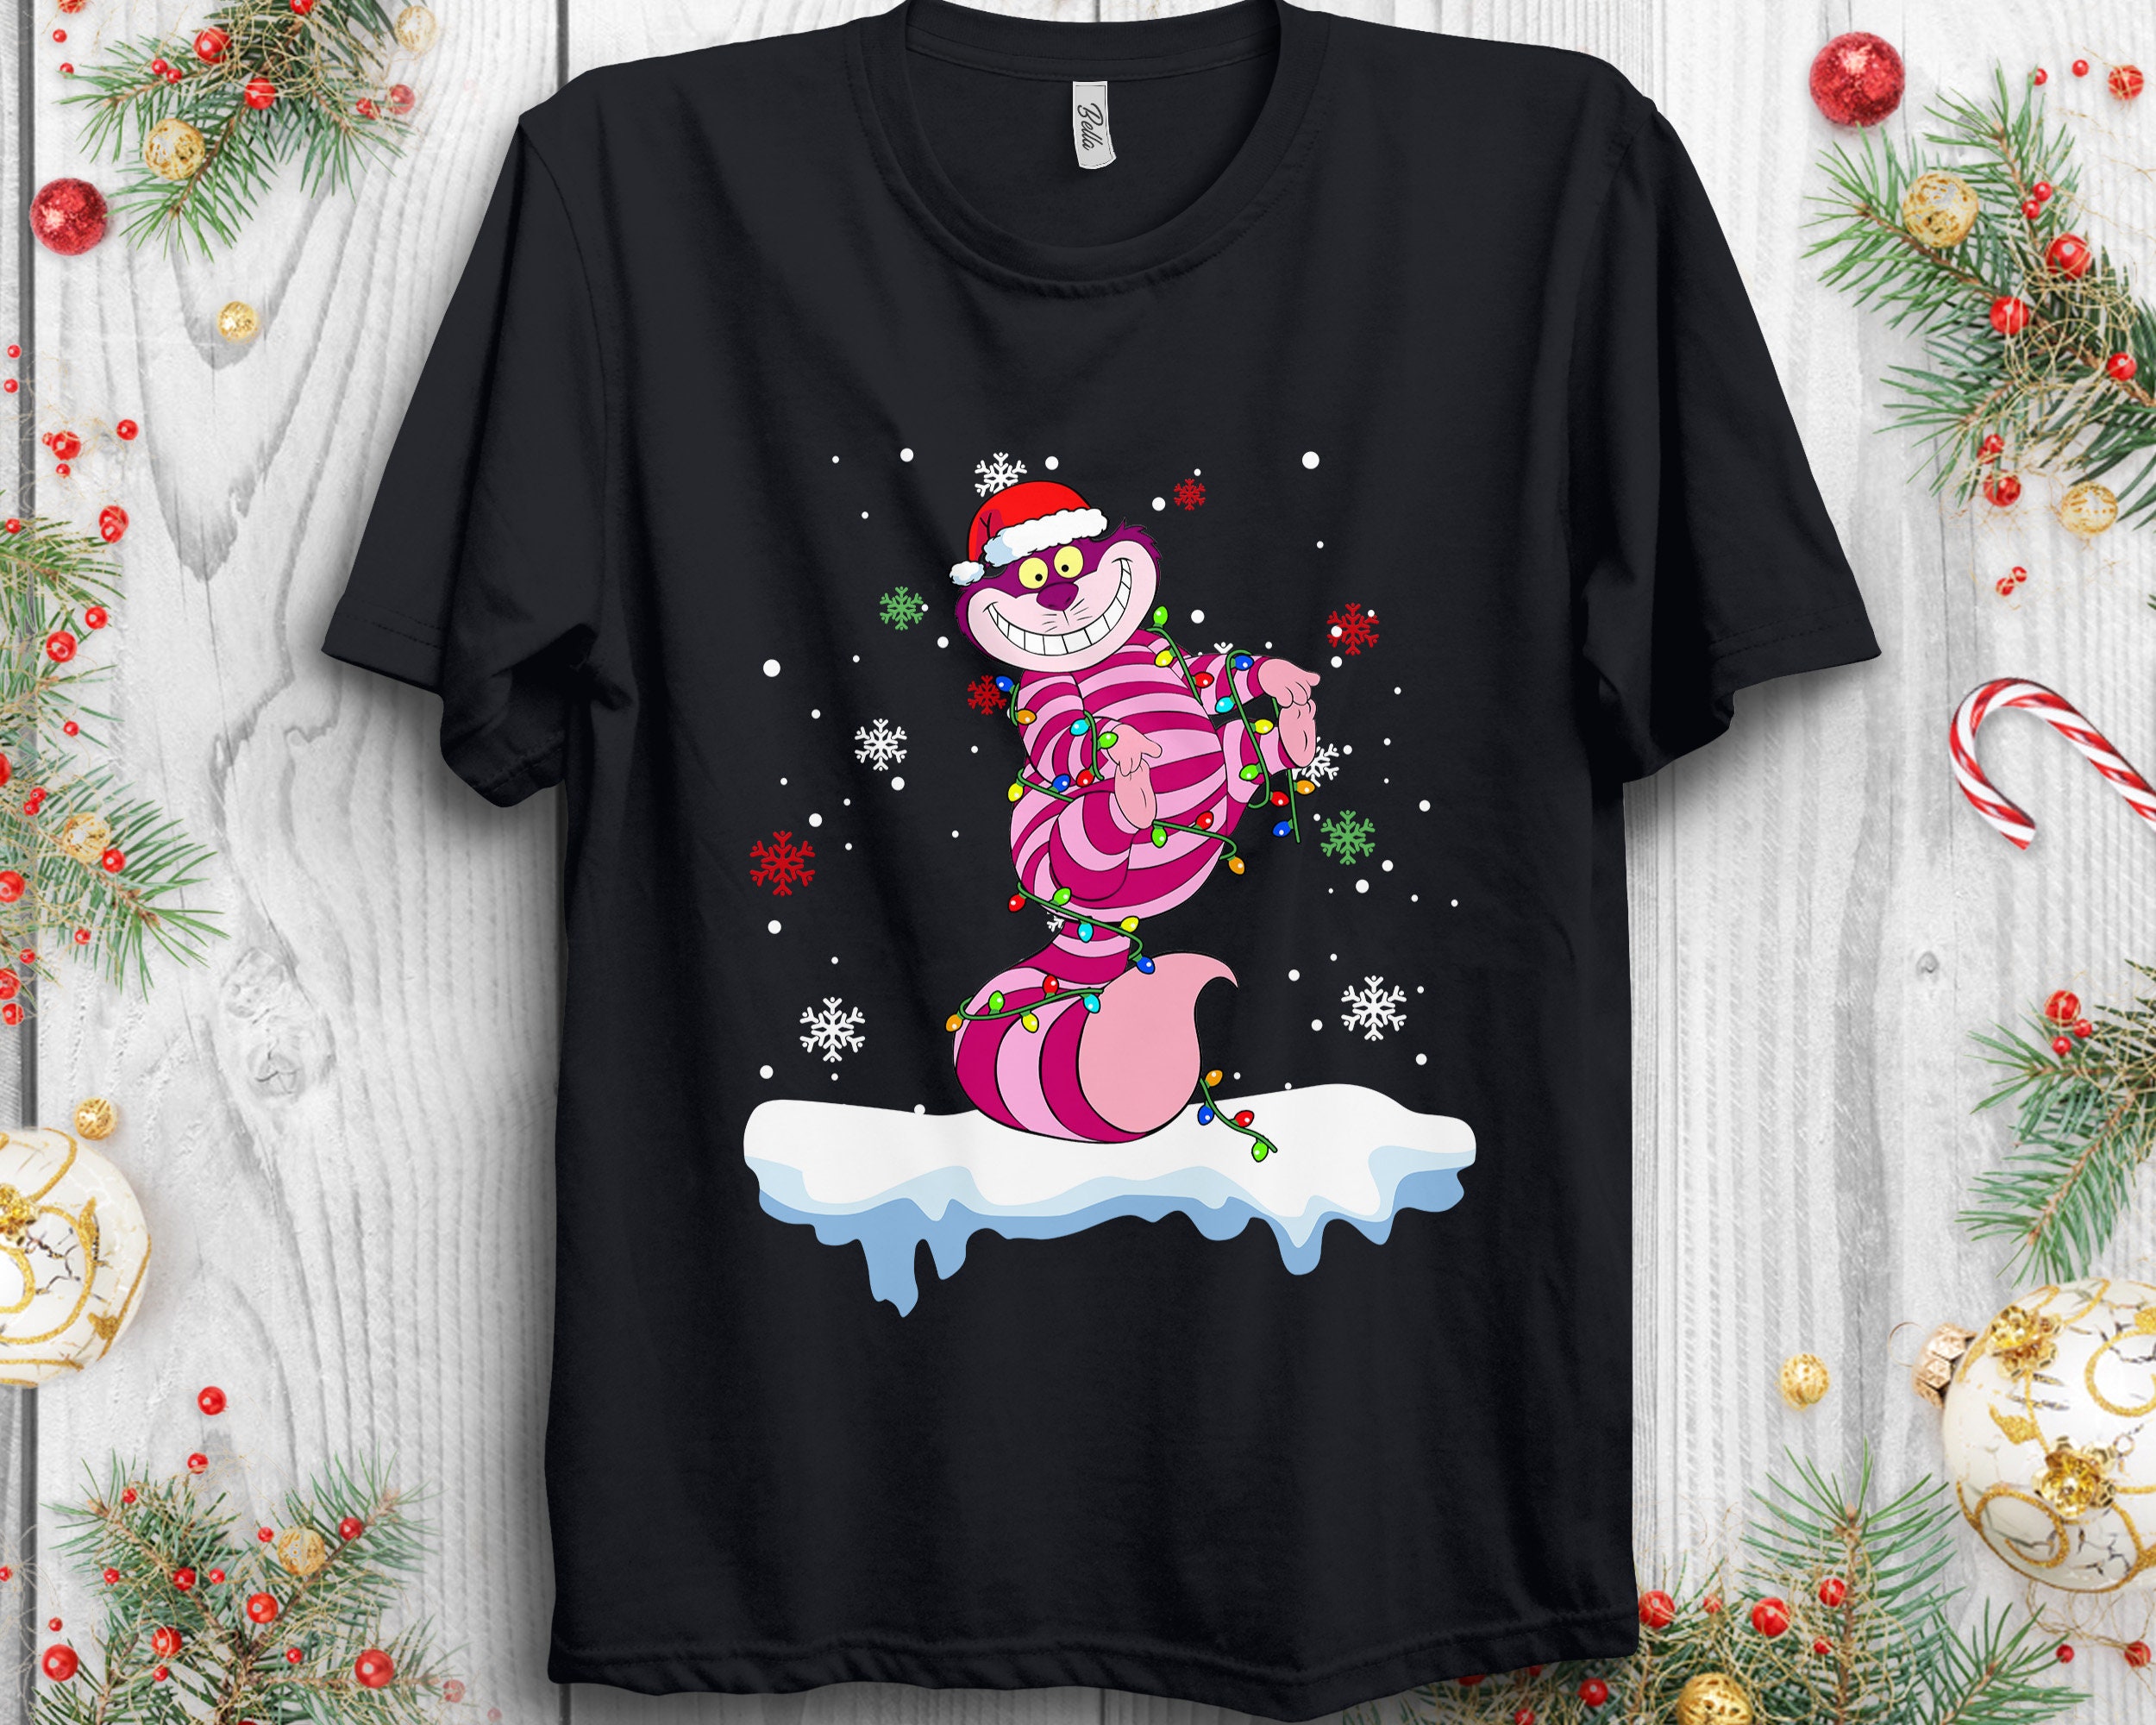 Discover Disney Cheshire Cat Shirt